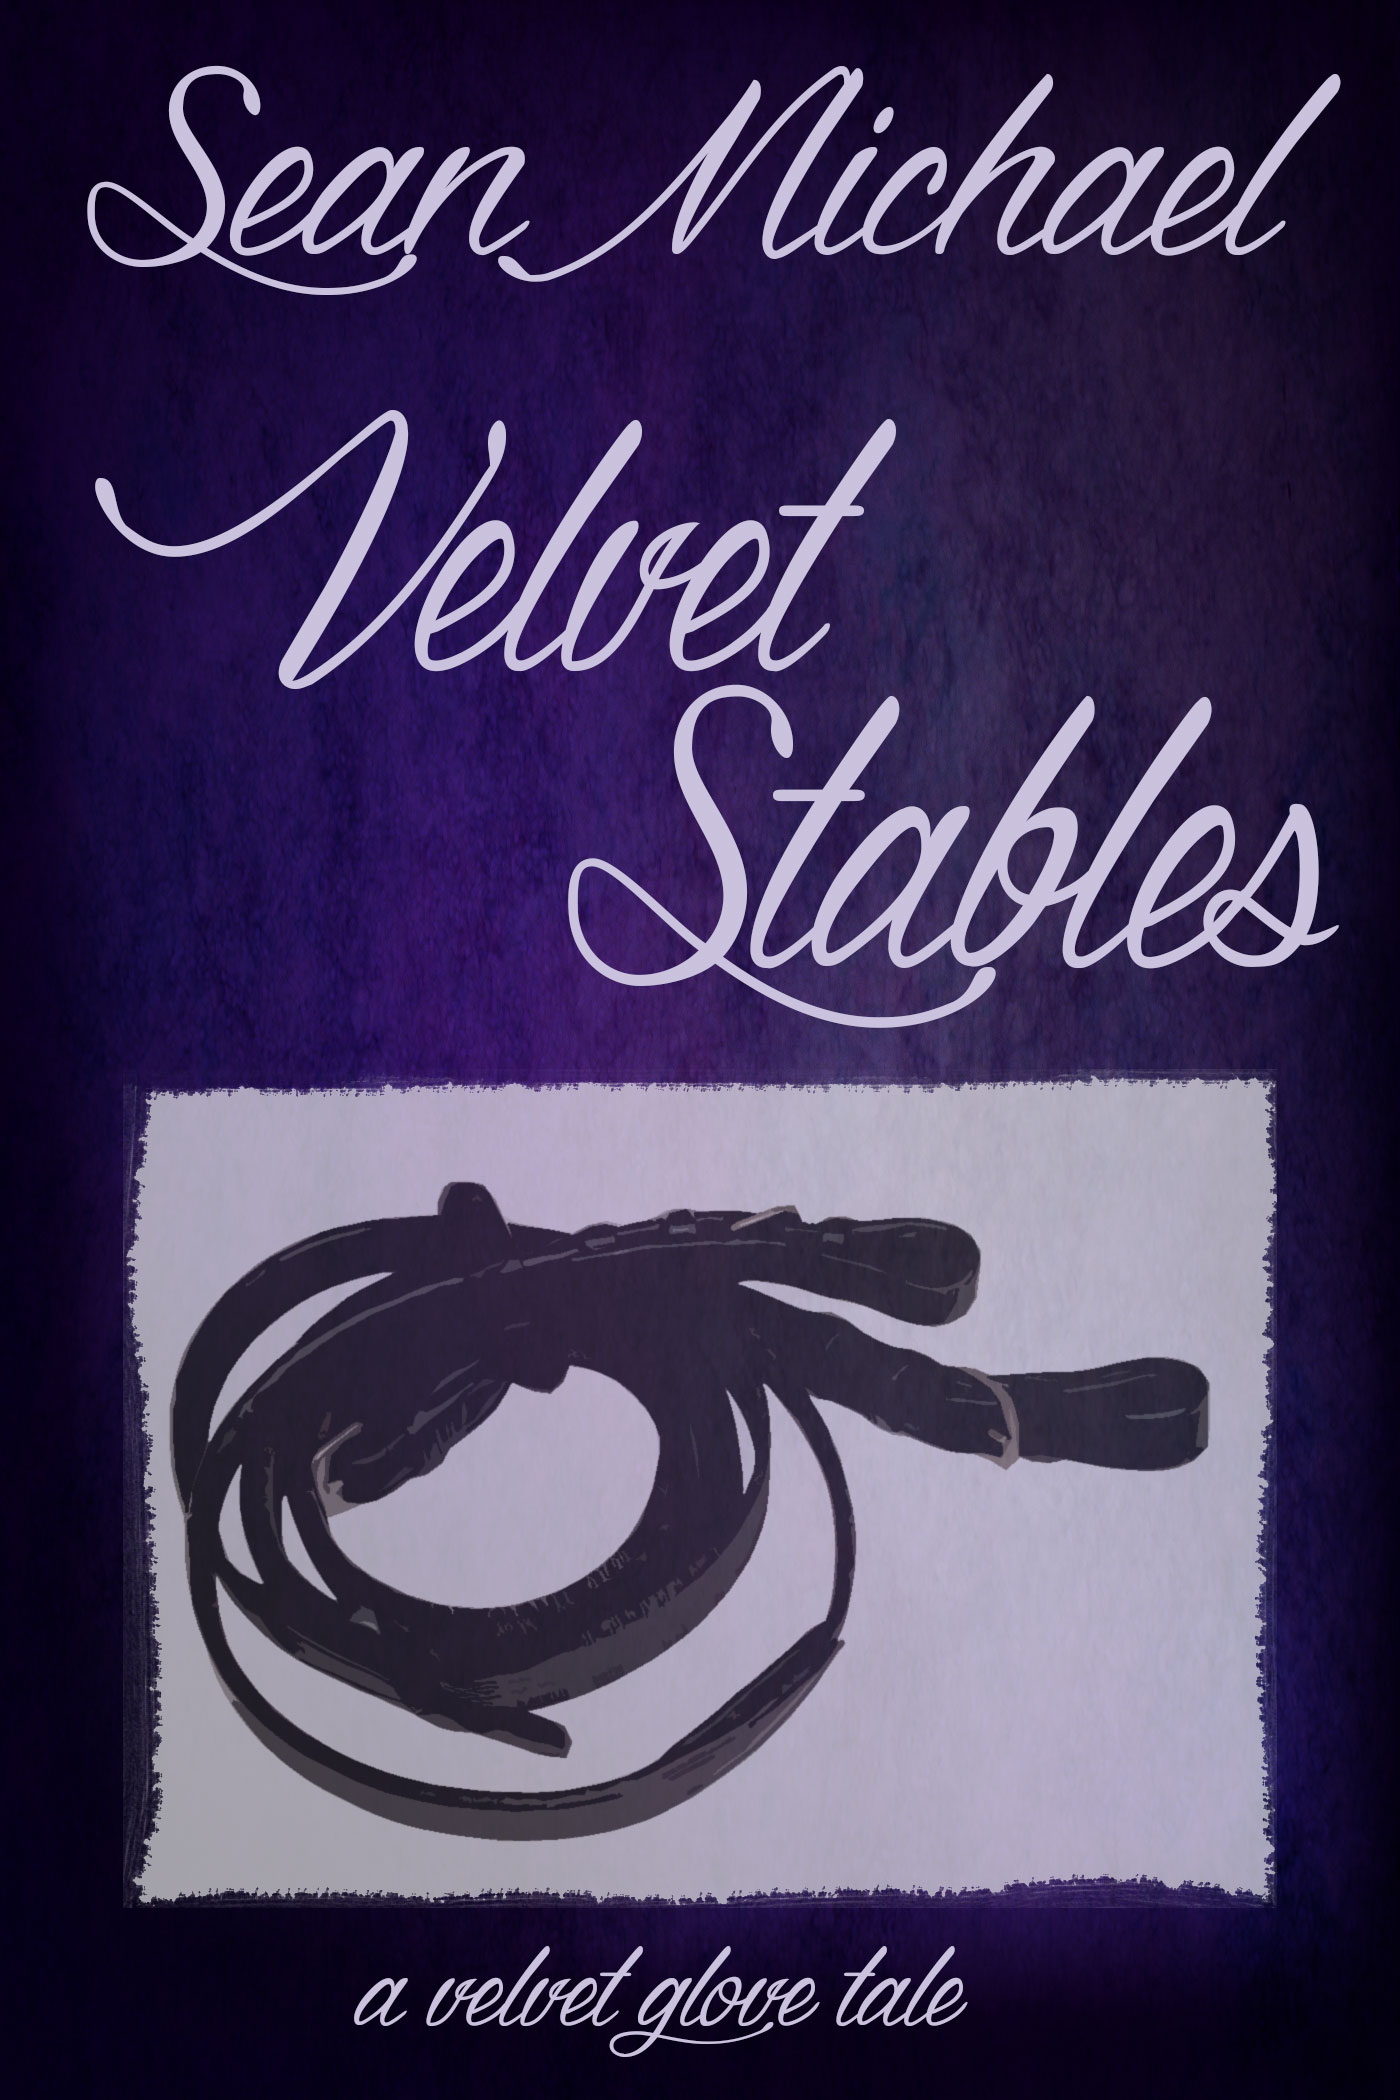 Velvet Stables by Sean Michael